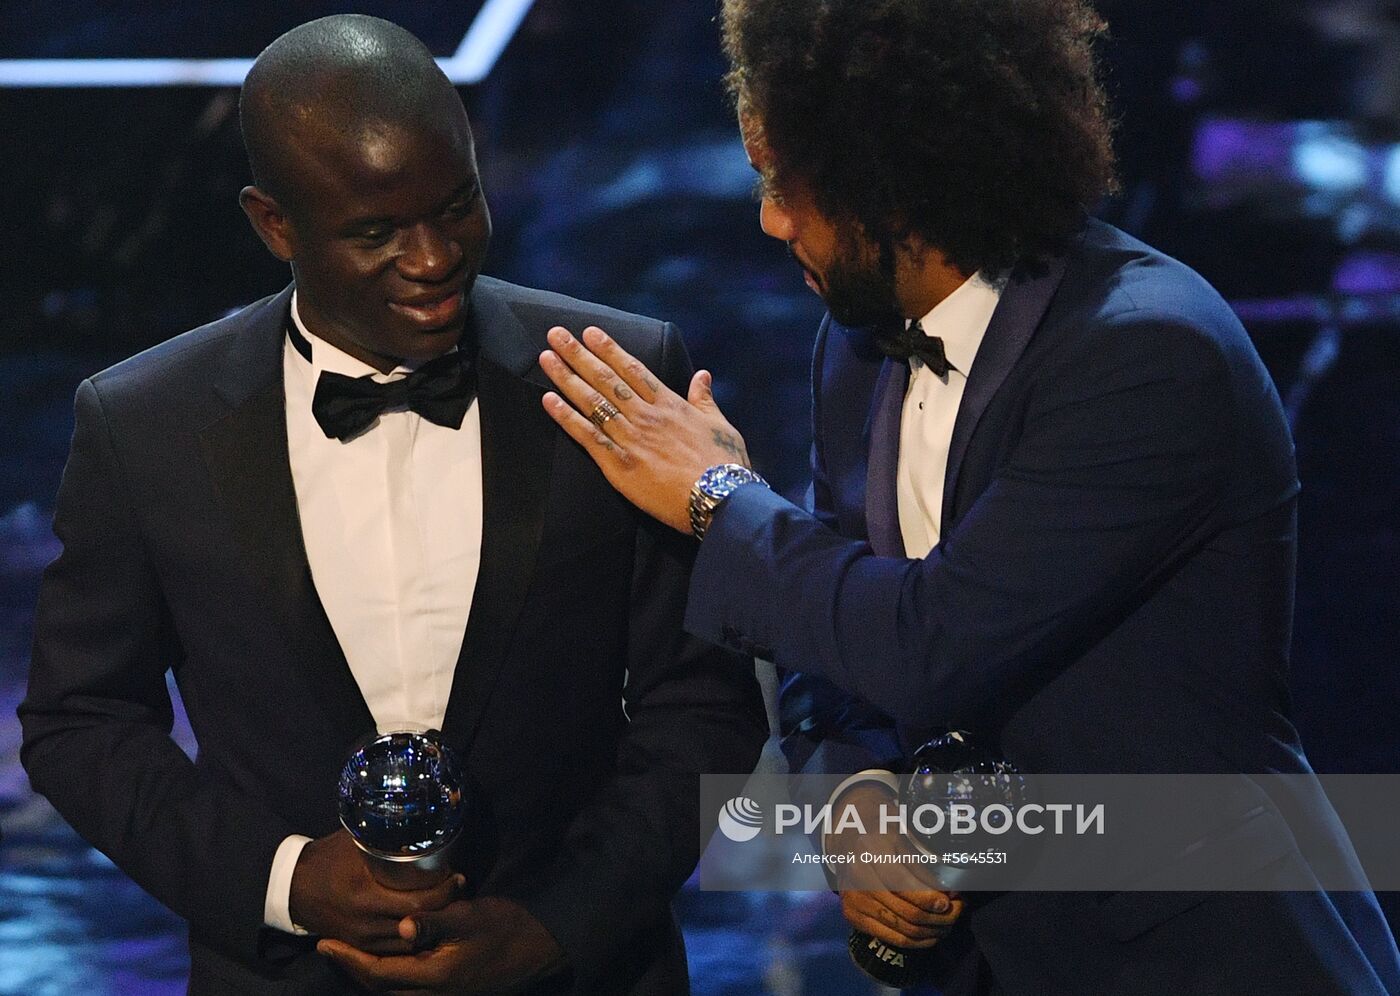 Церемония вручения наград The Best FIFA Football Awards 2018